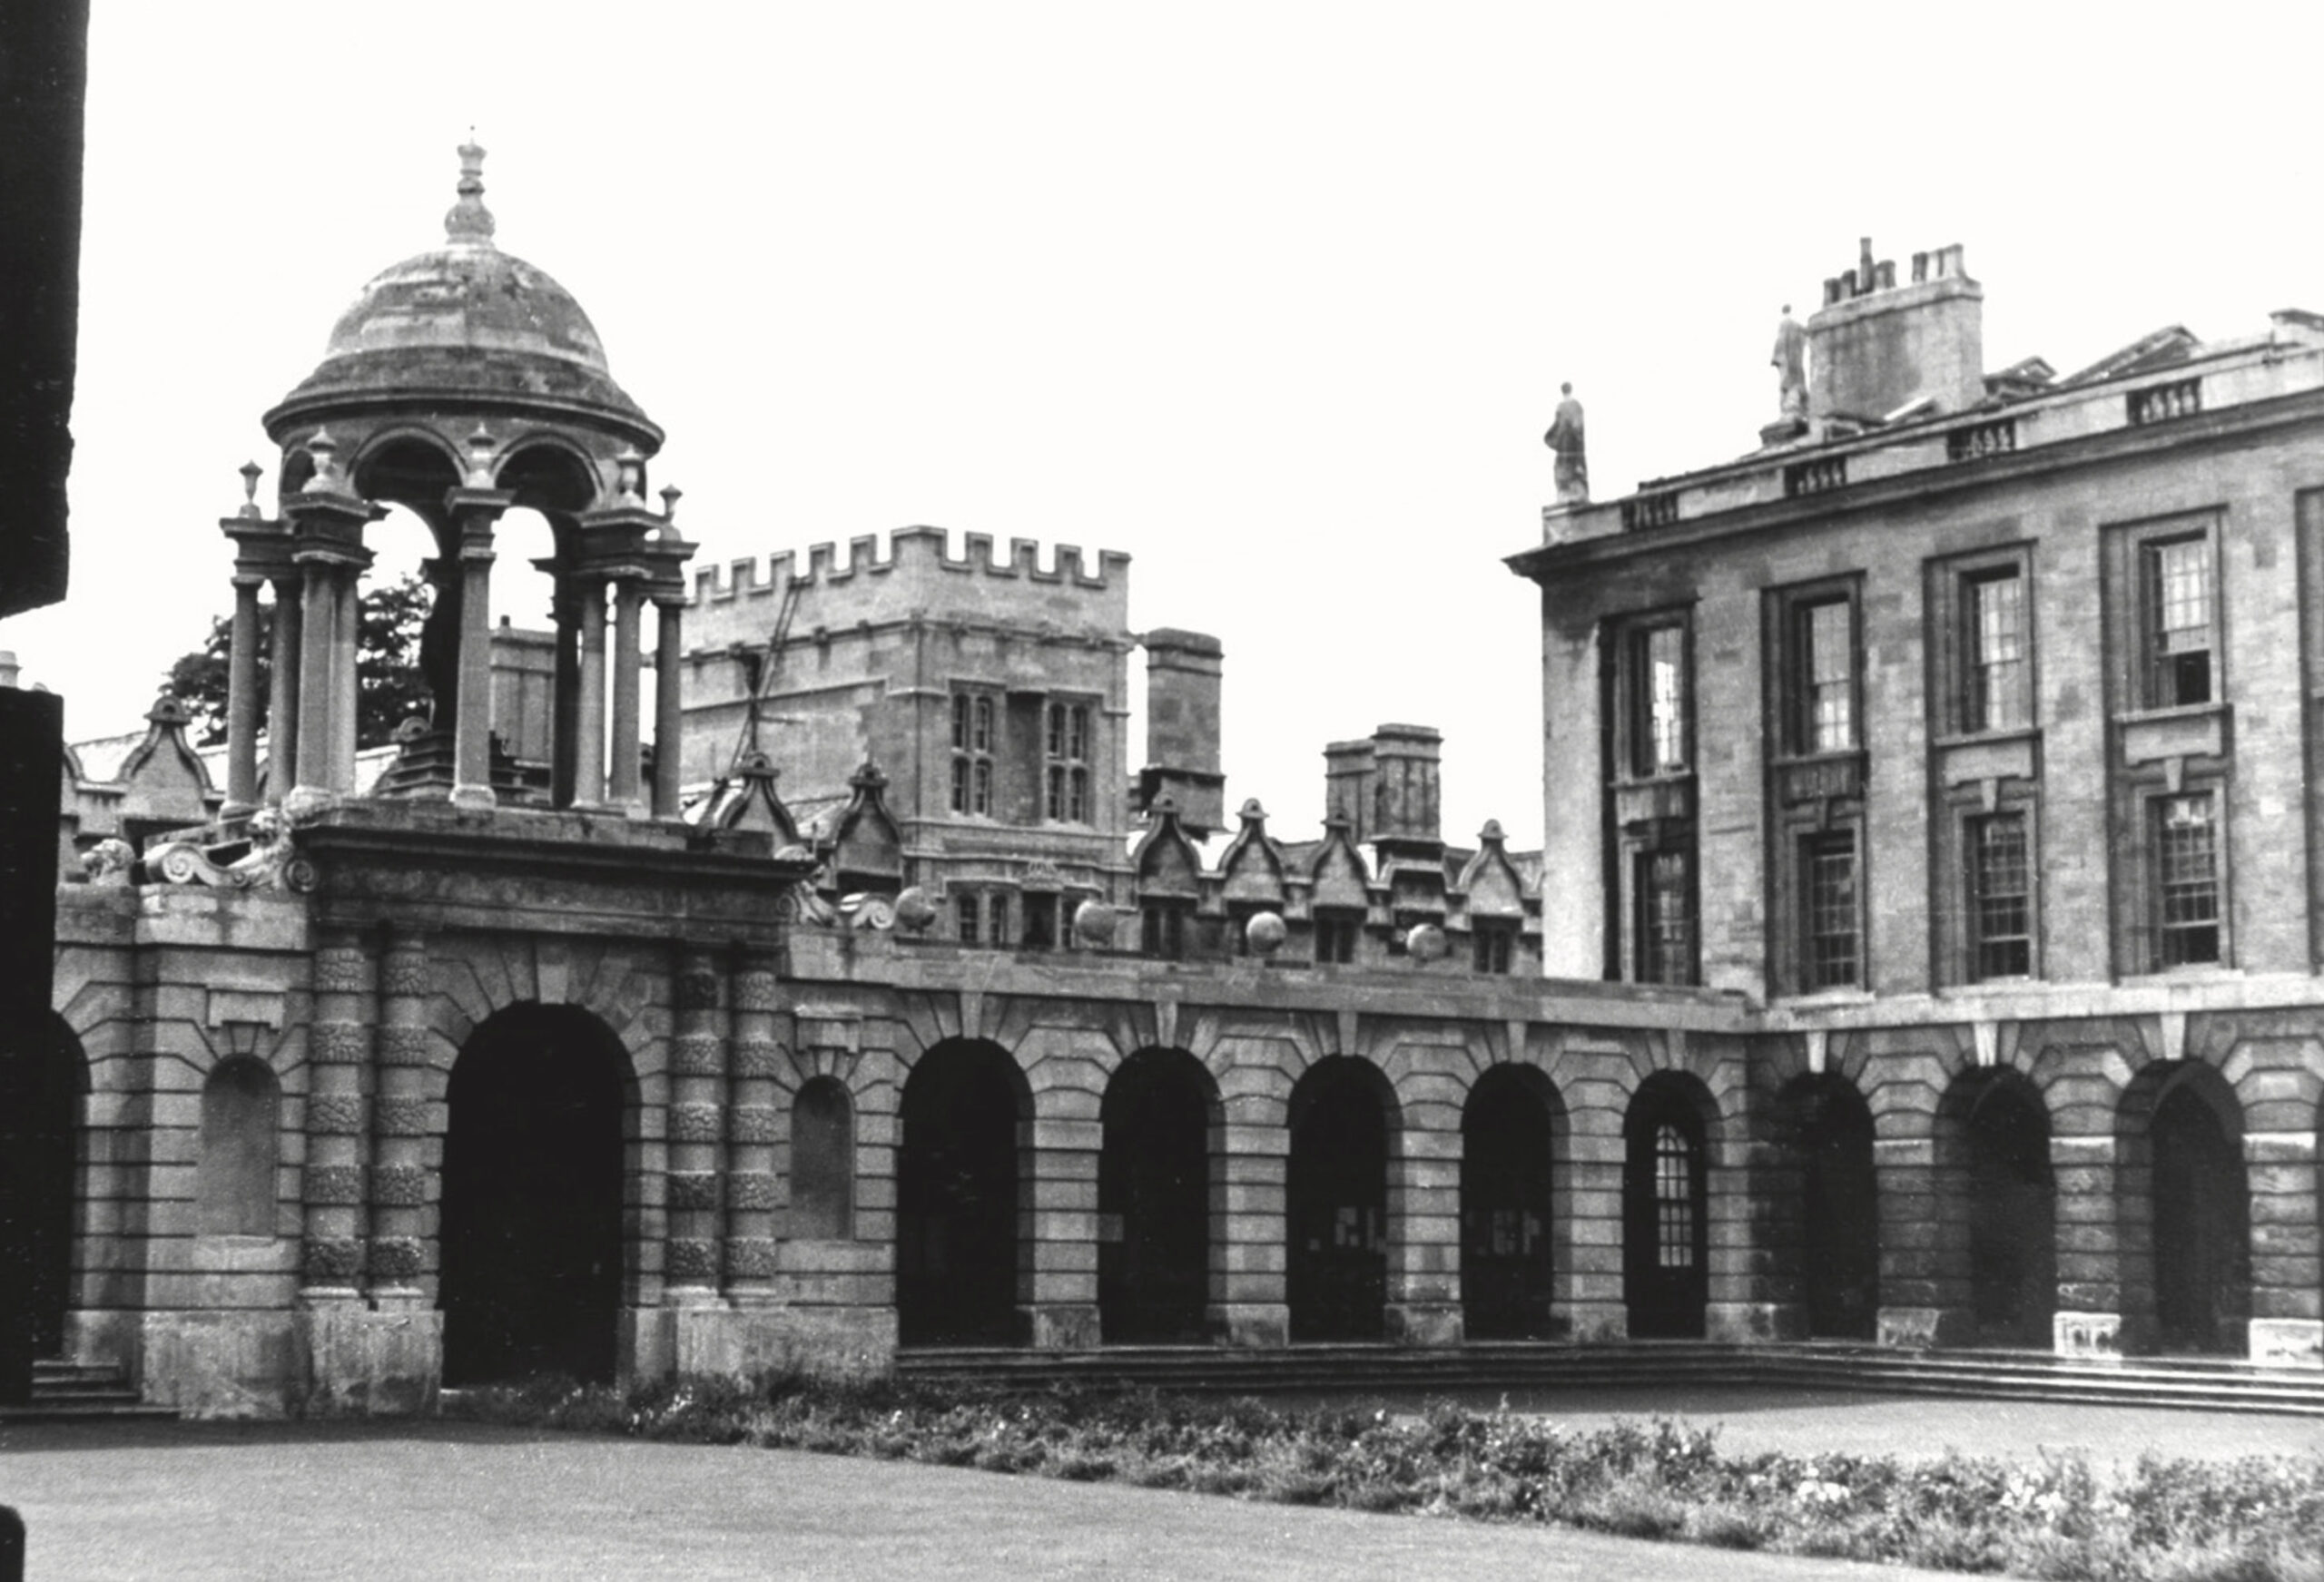 Queen’s College Quadrangle at the University of Oxford